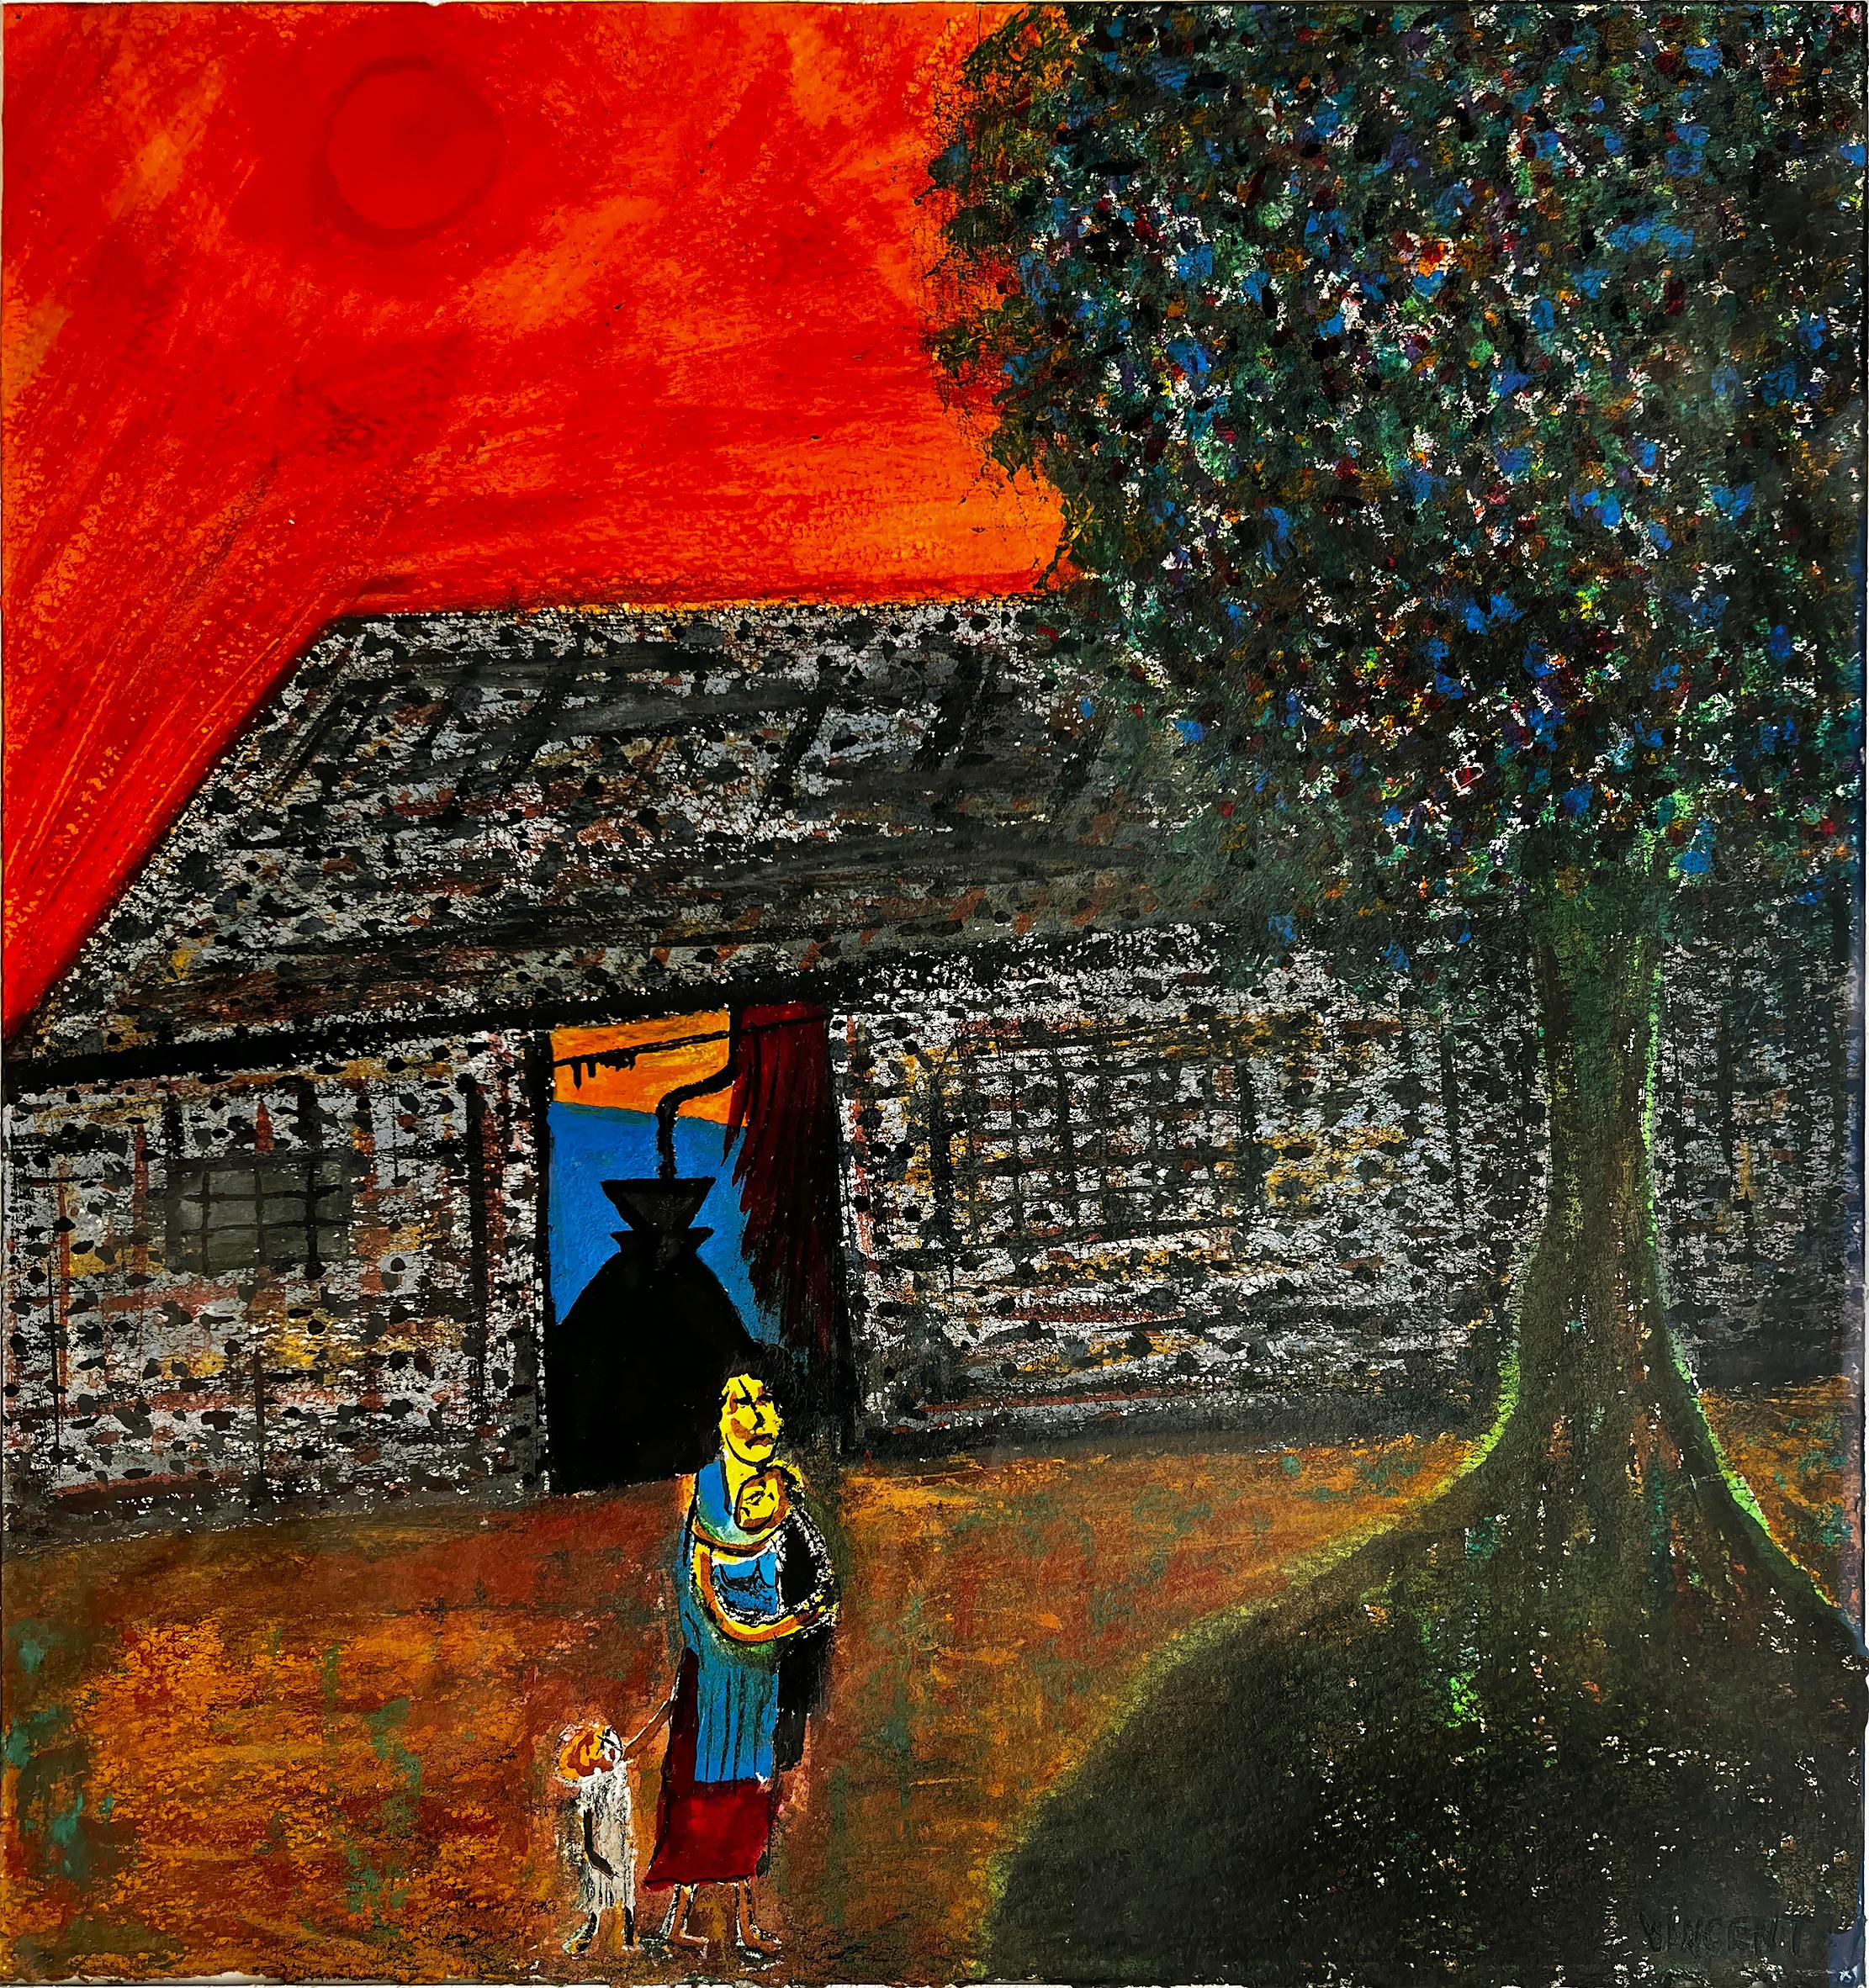  Vincent D. Smith Landscape Painting – Home, African Village Scene Orange Sky, African American Artist, afrikanische Künstlerin